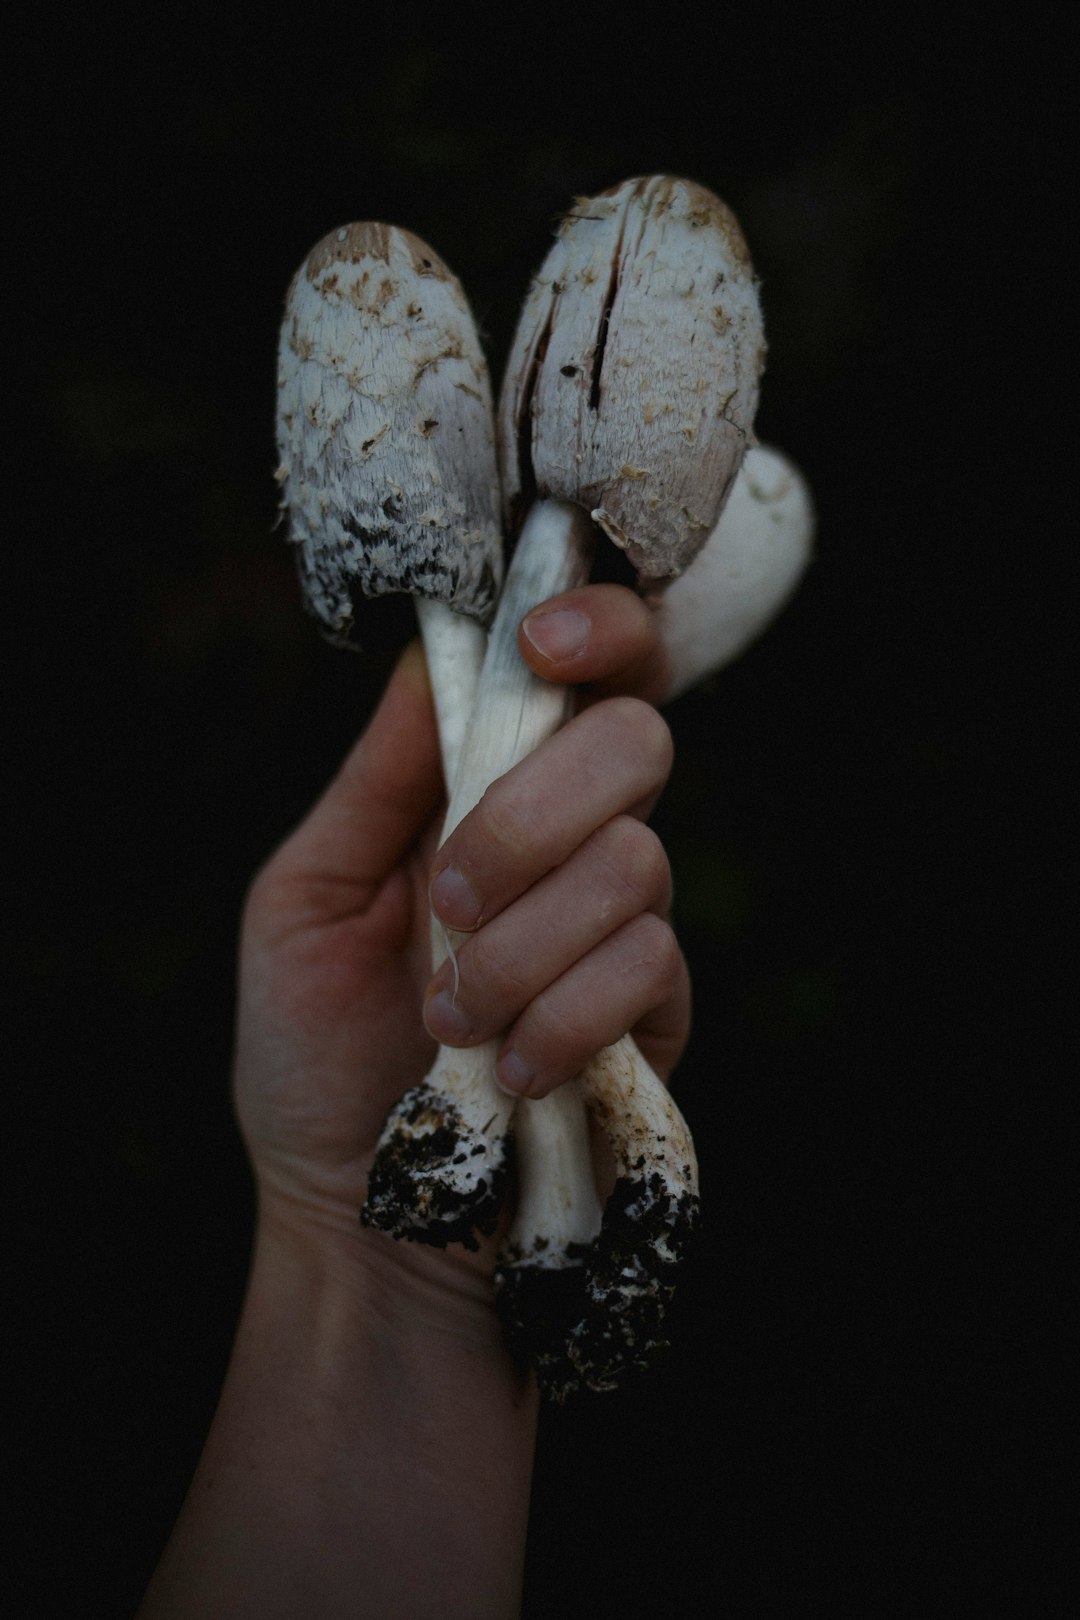 person holding mushroom